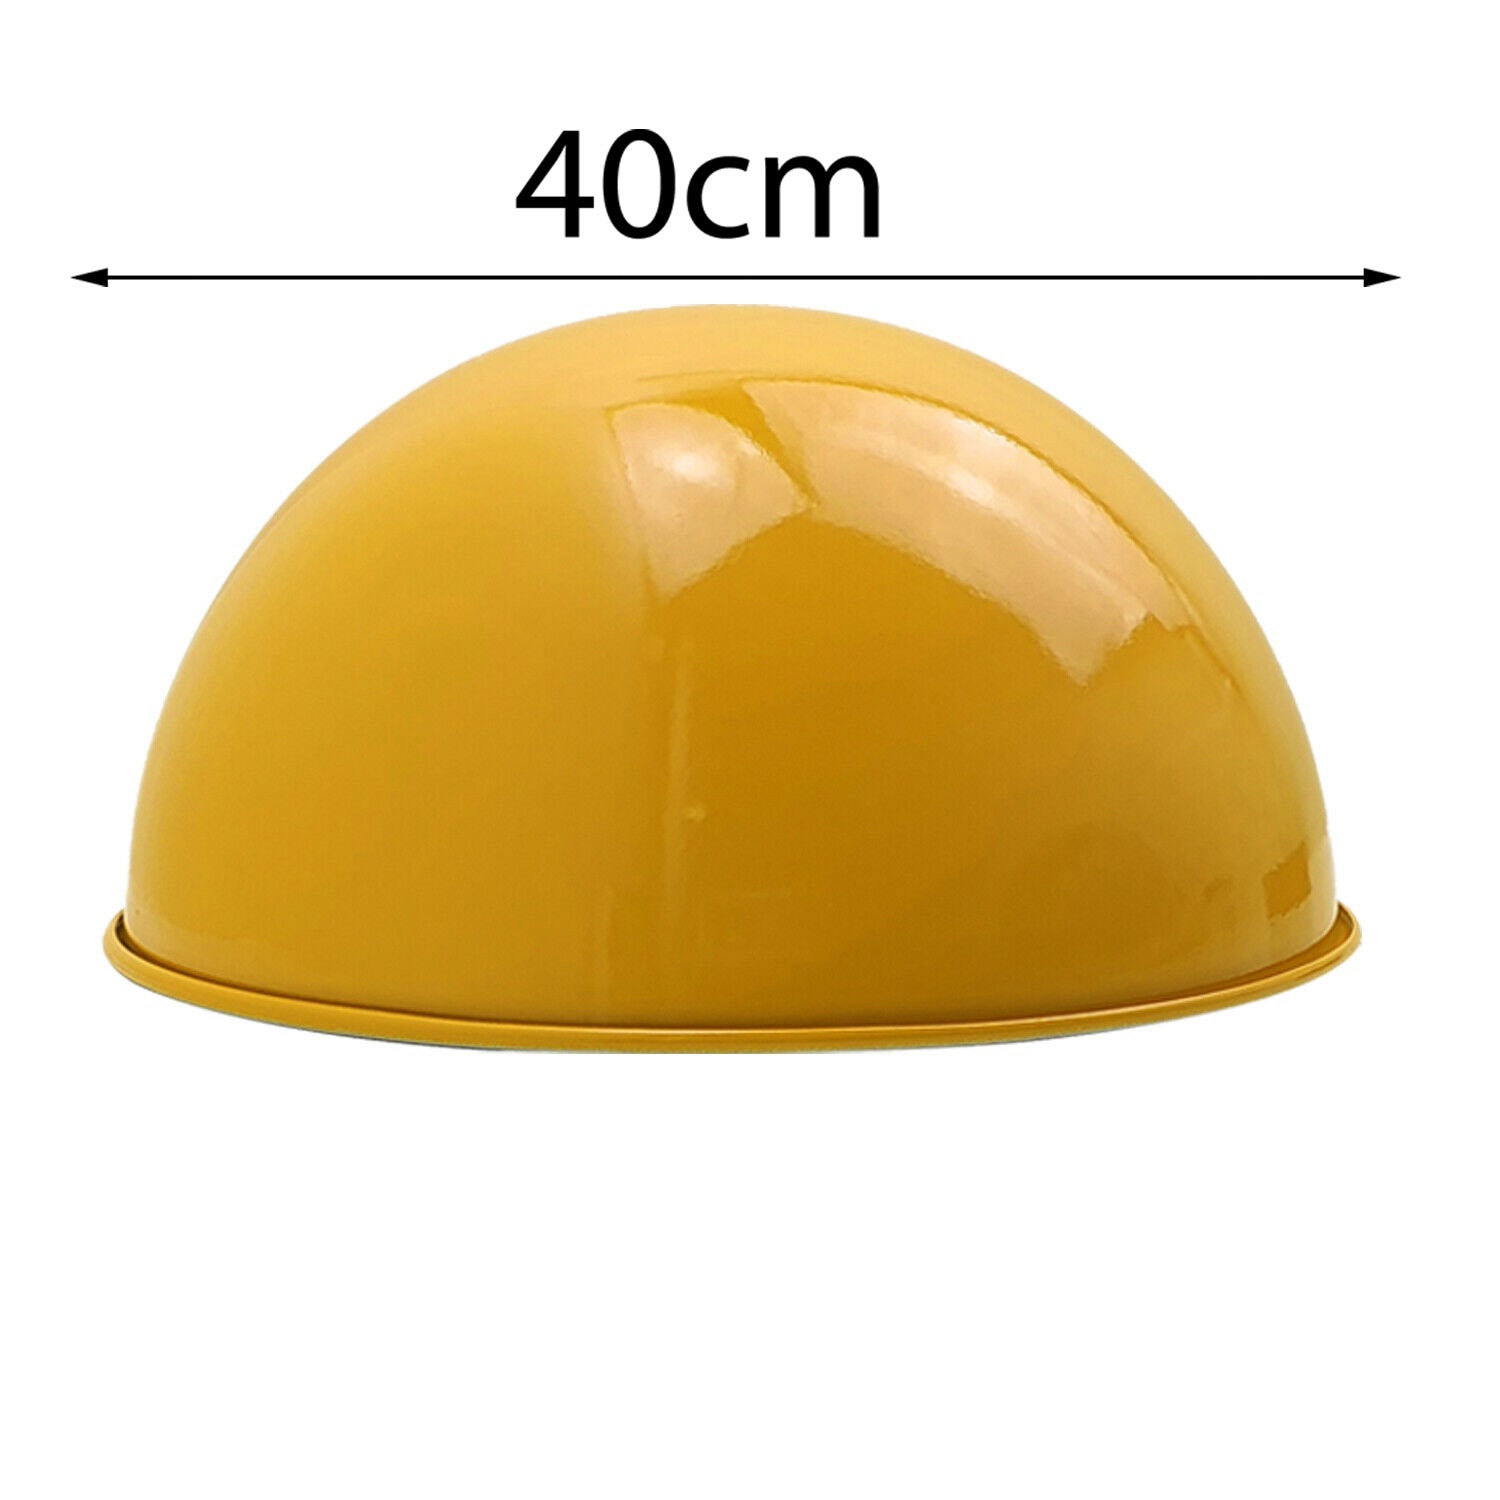 Dome Yellow 40cm Wide Lampshade Ceiling Light Shade Pendant Lights Fixture~3655 - LEDSone UK Ltd